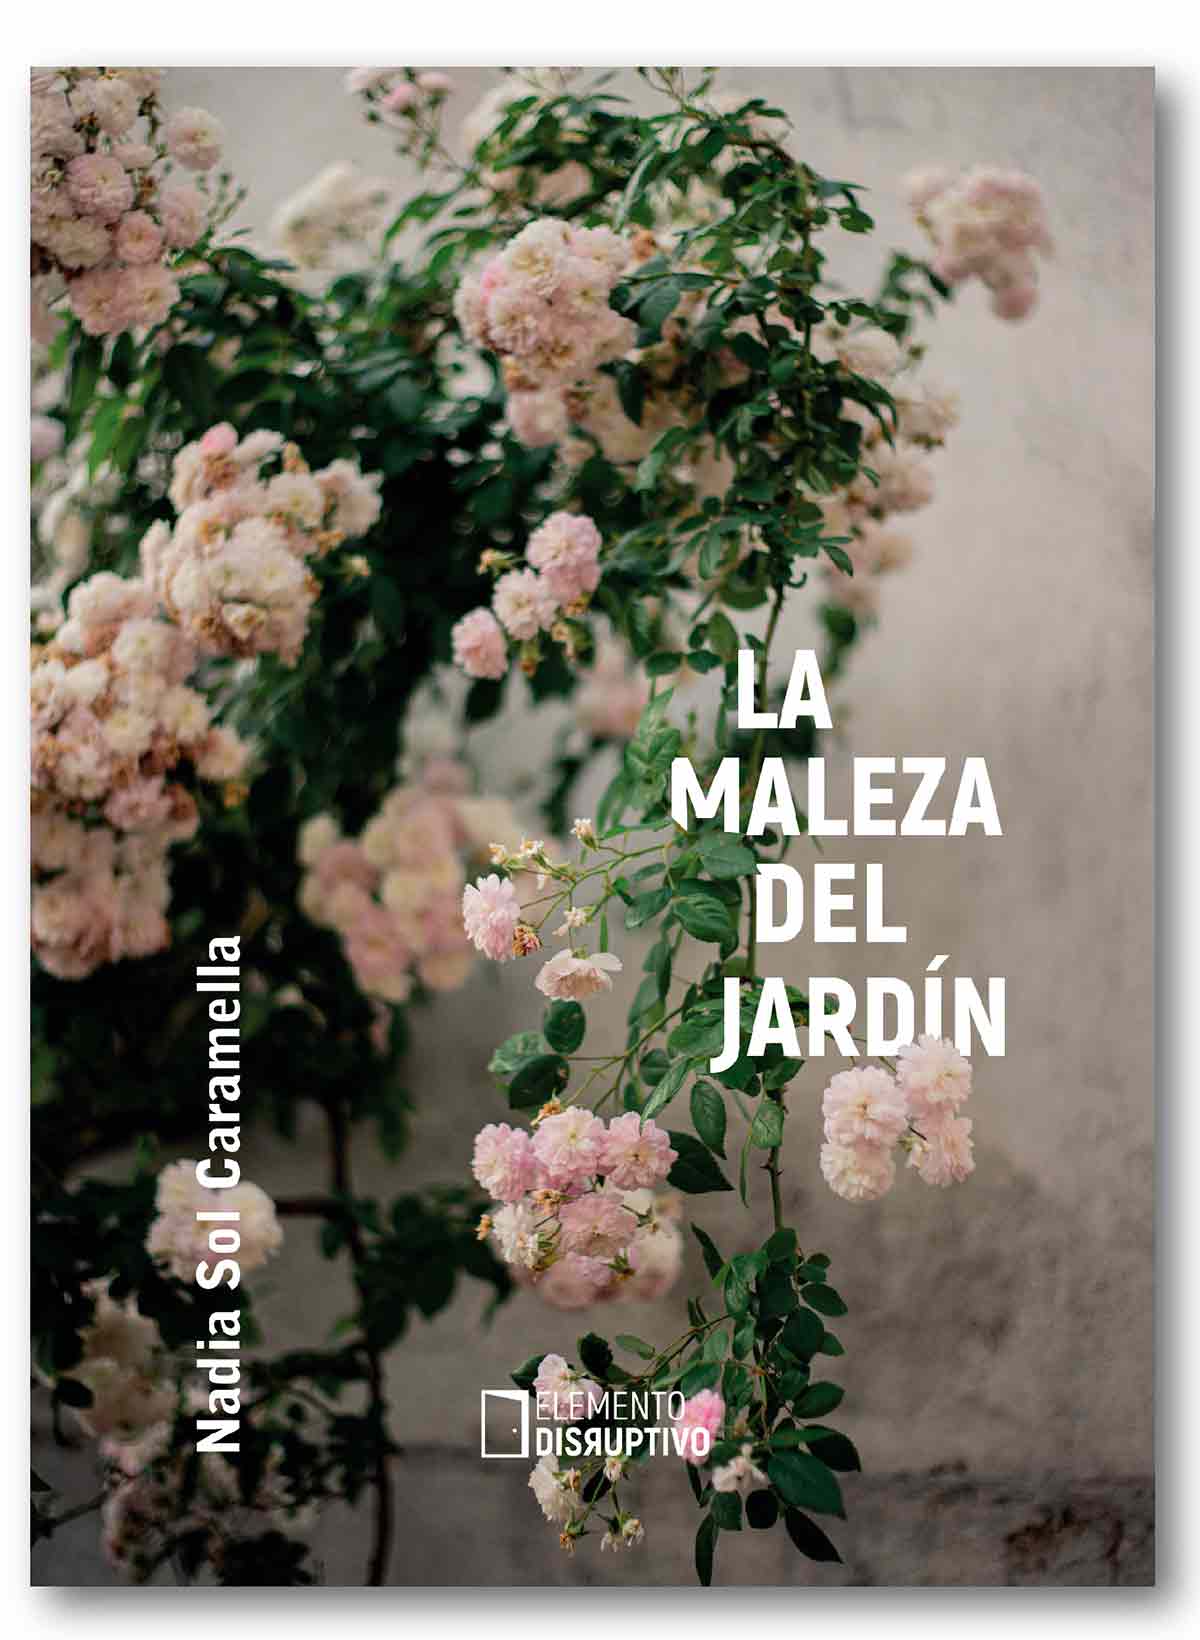 Tapa de "La maleza del jardín", libro de Nadia Sol Caramella